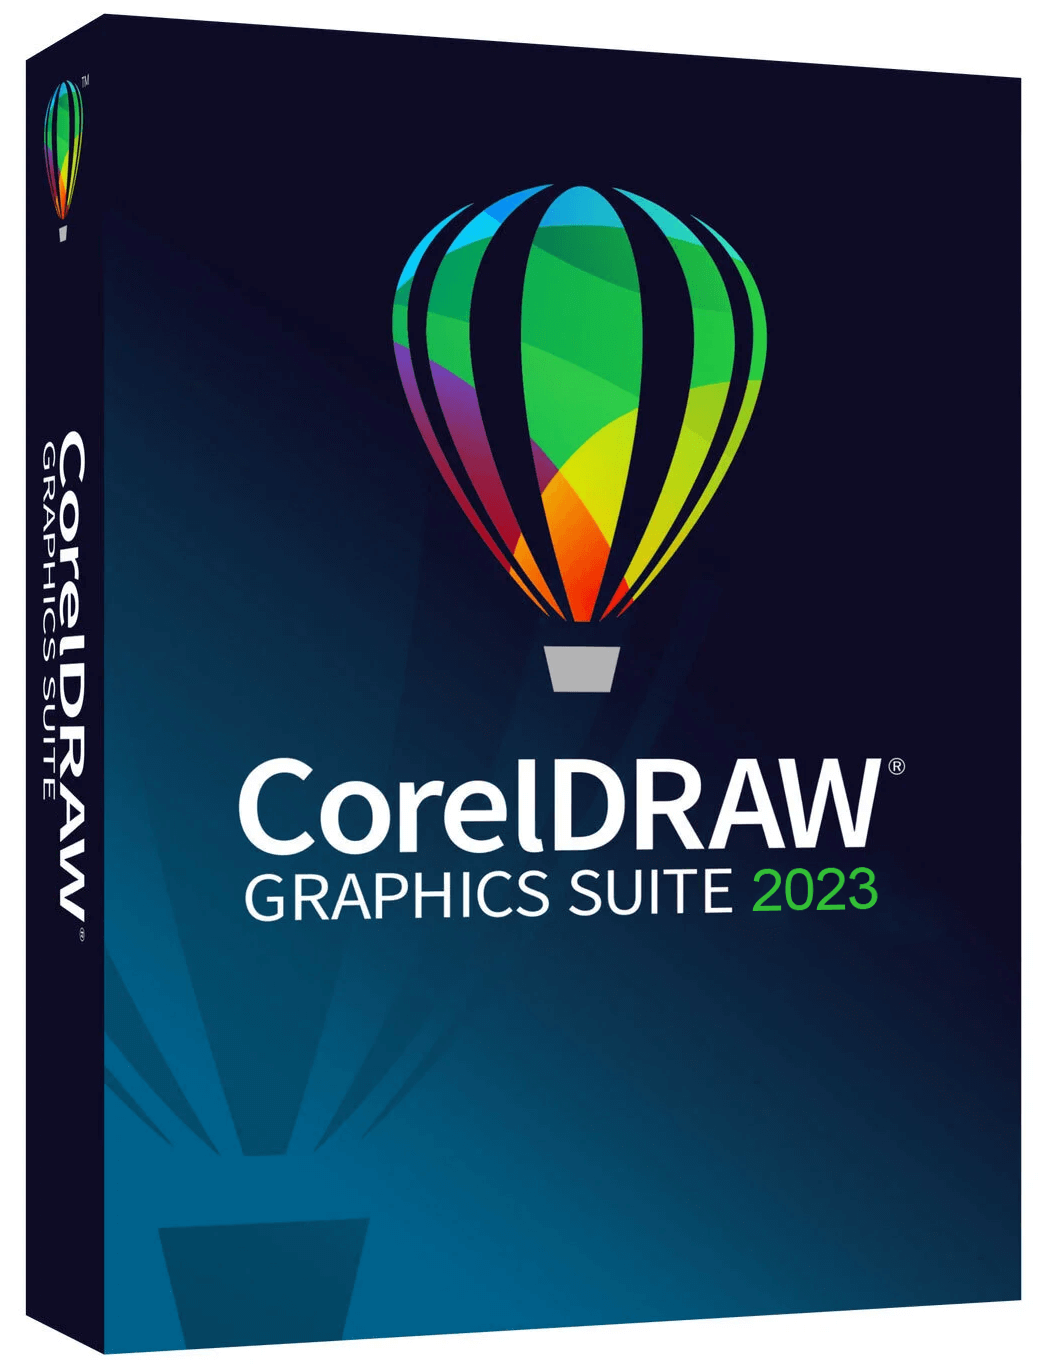 coreldraw suite 2023 free download